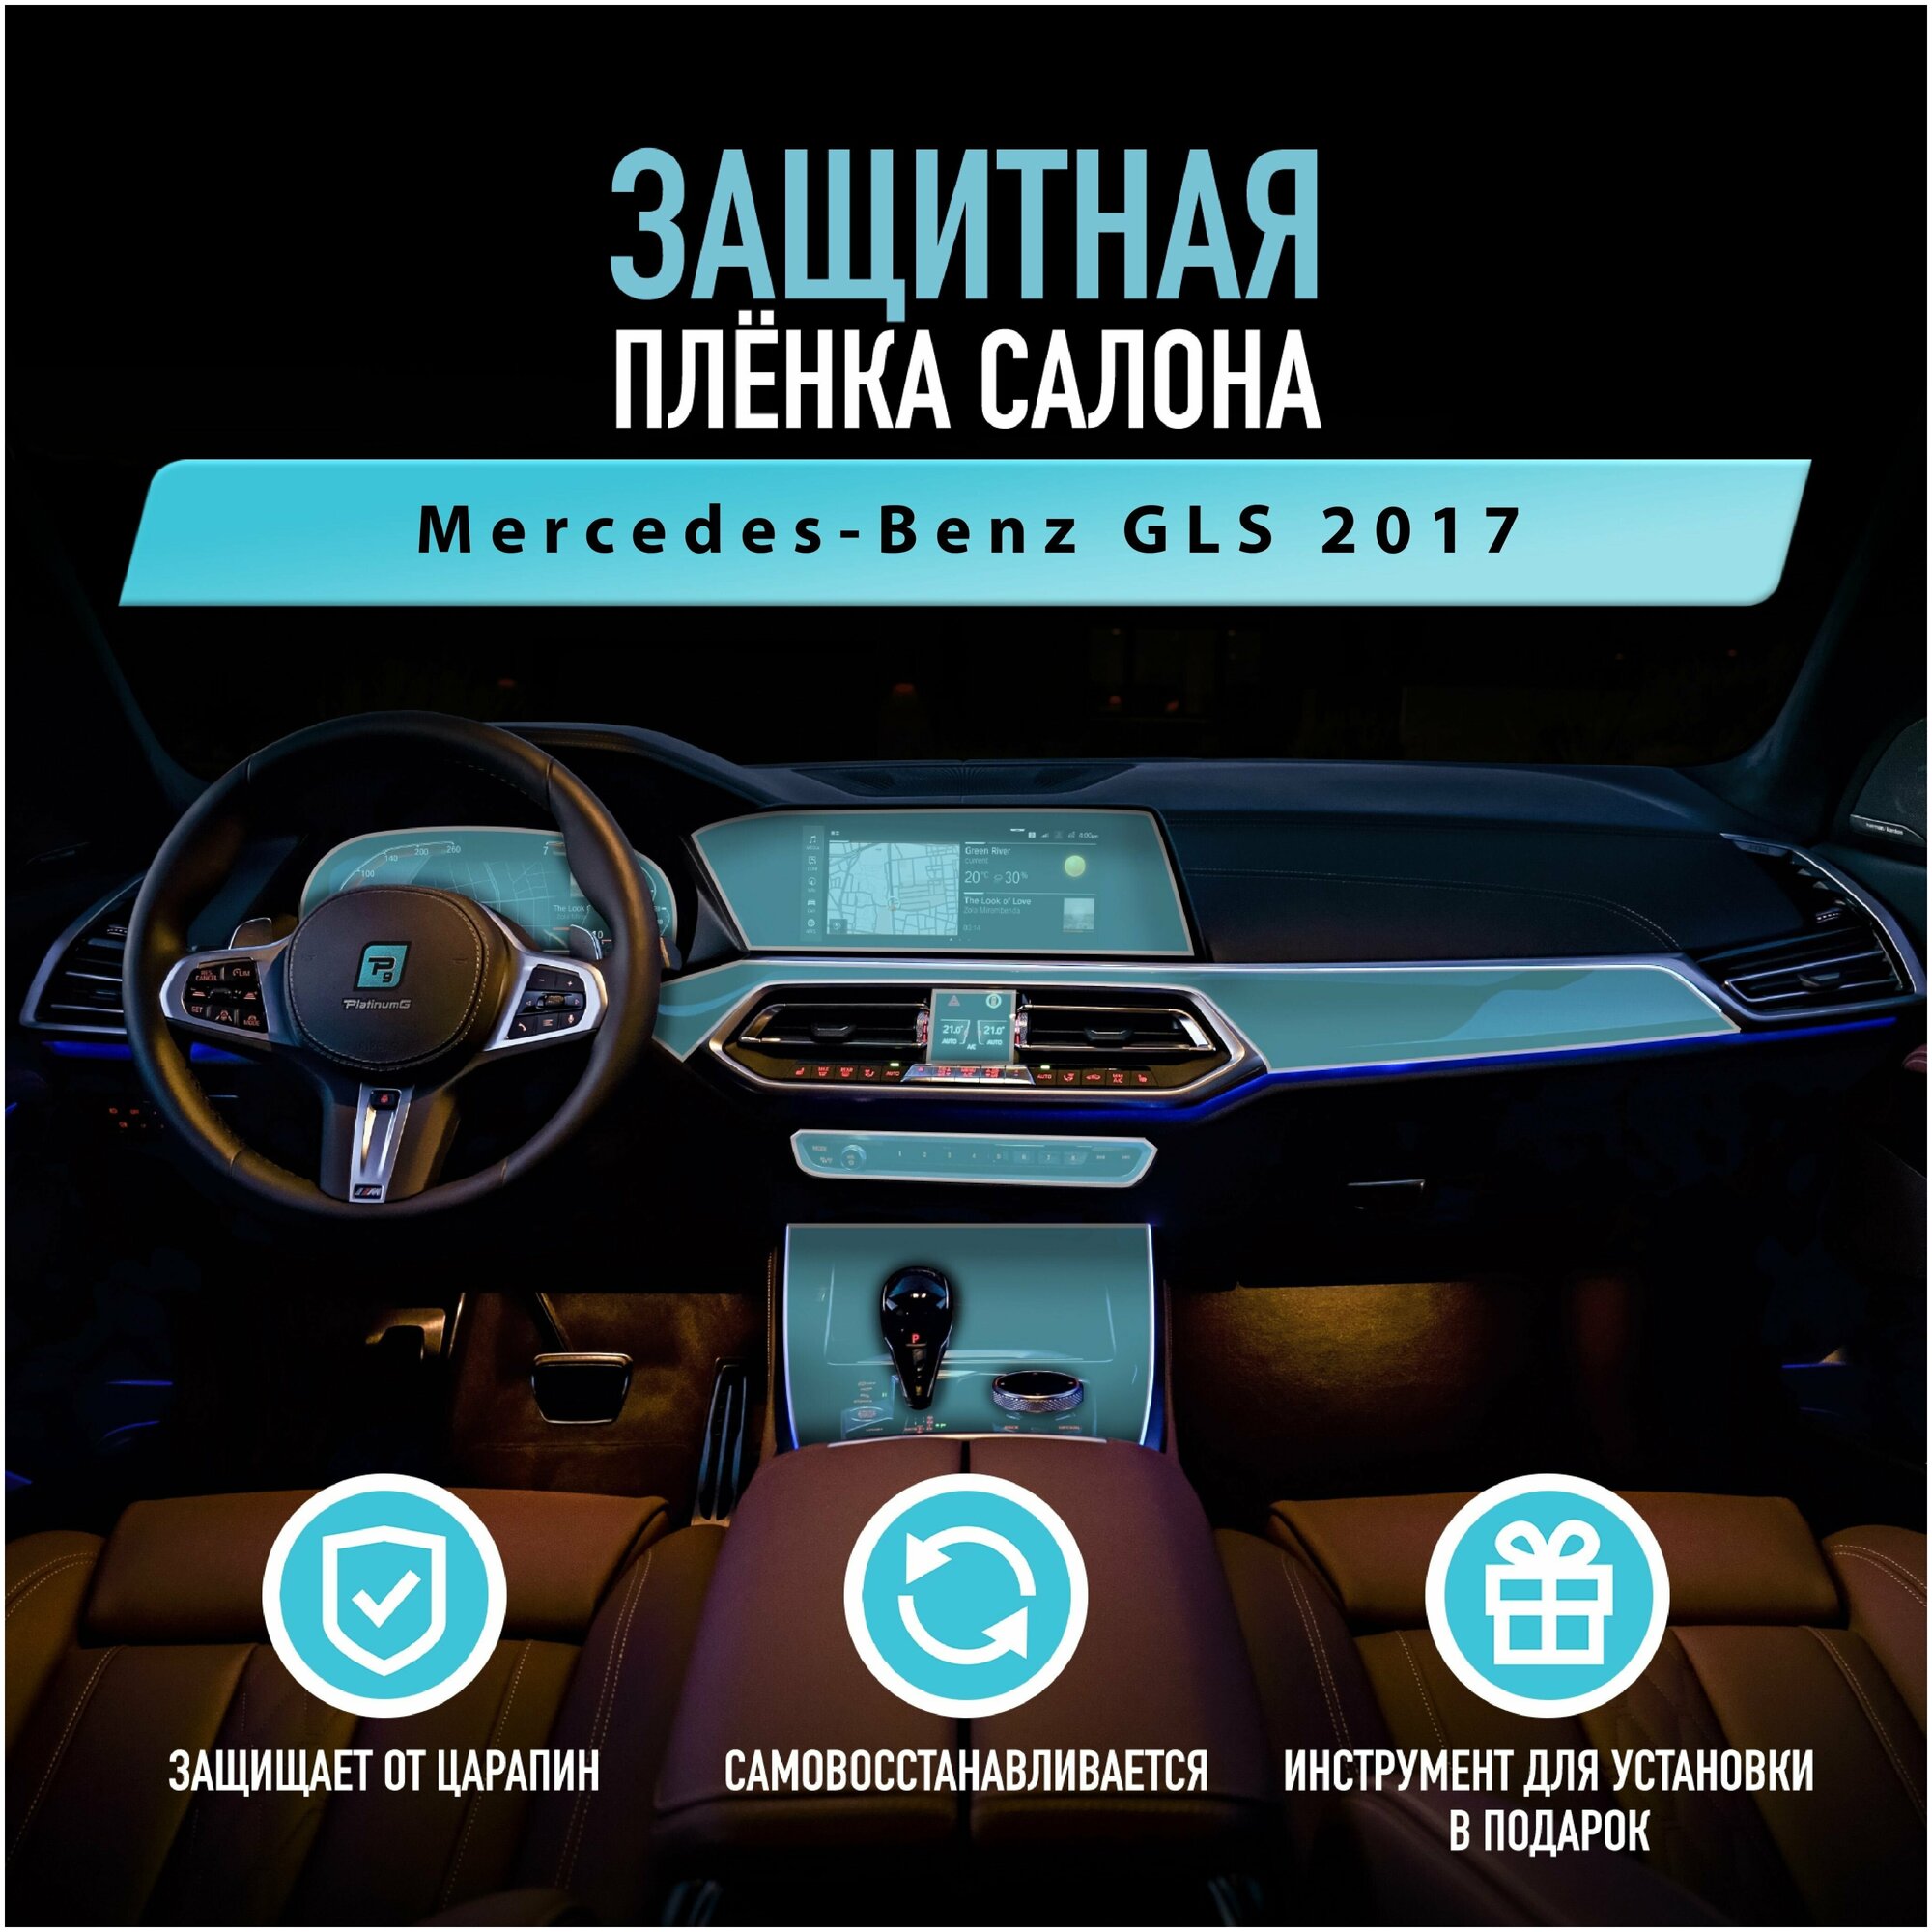 Защитная пленка для автомобиля Mercedes-Benz GLS 2017 Мерседес, полиуретановая антигравийная пленка для салона, глянцевая